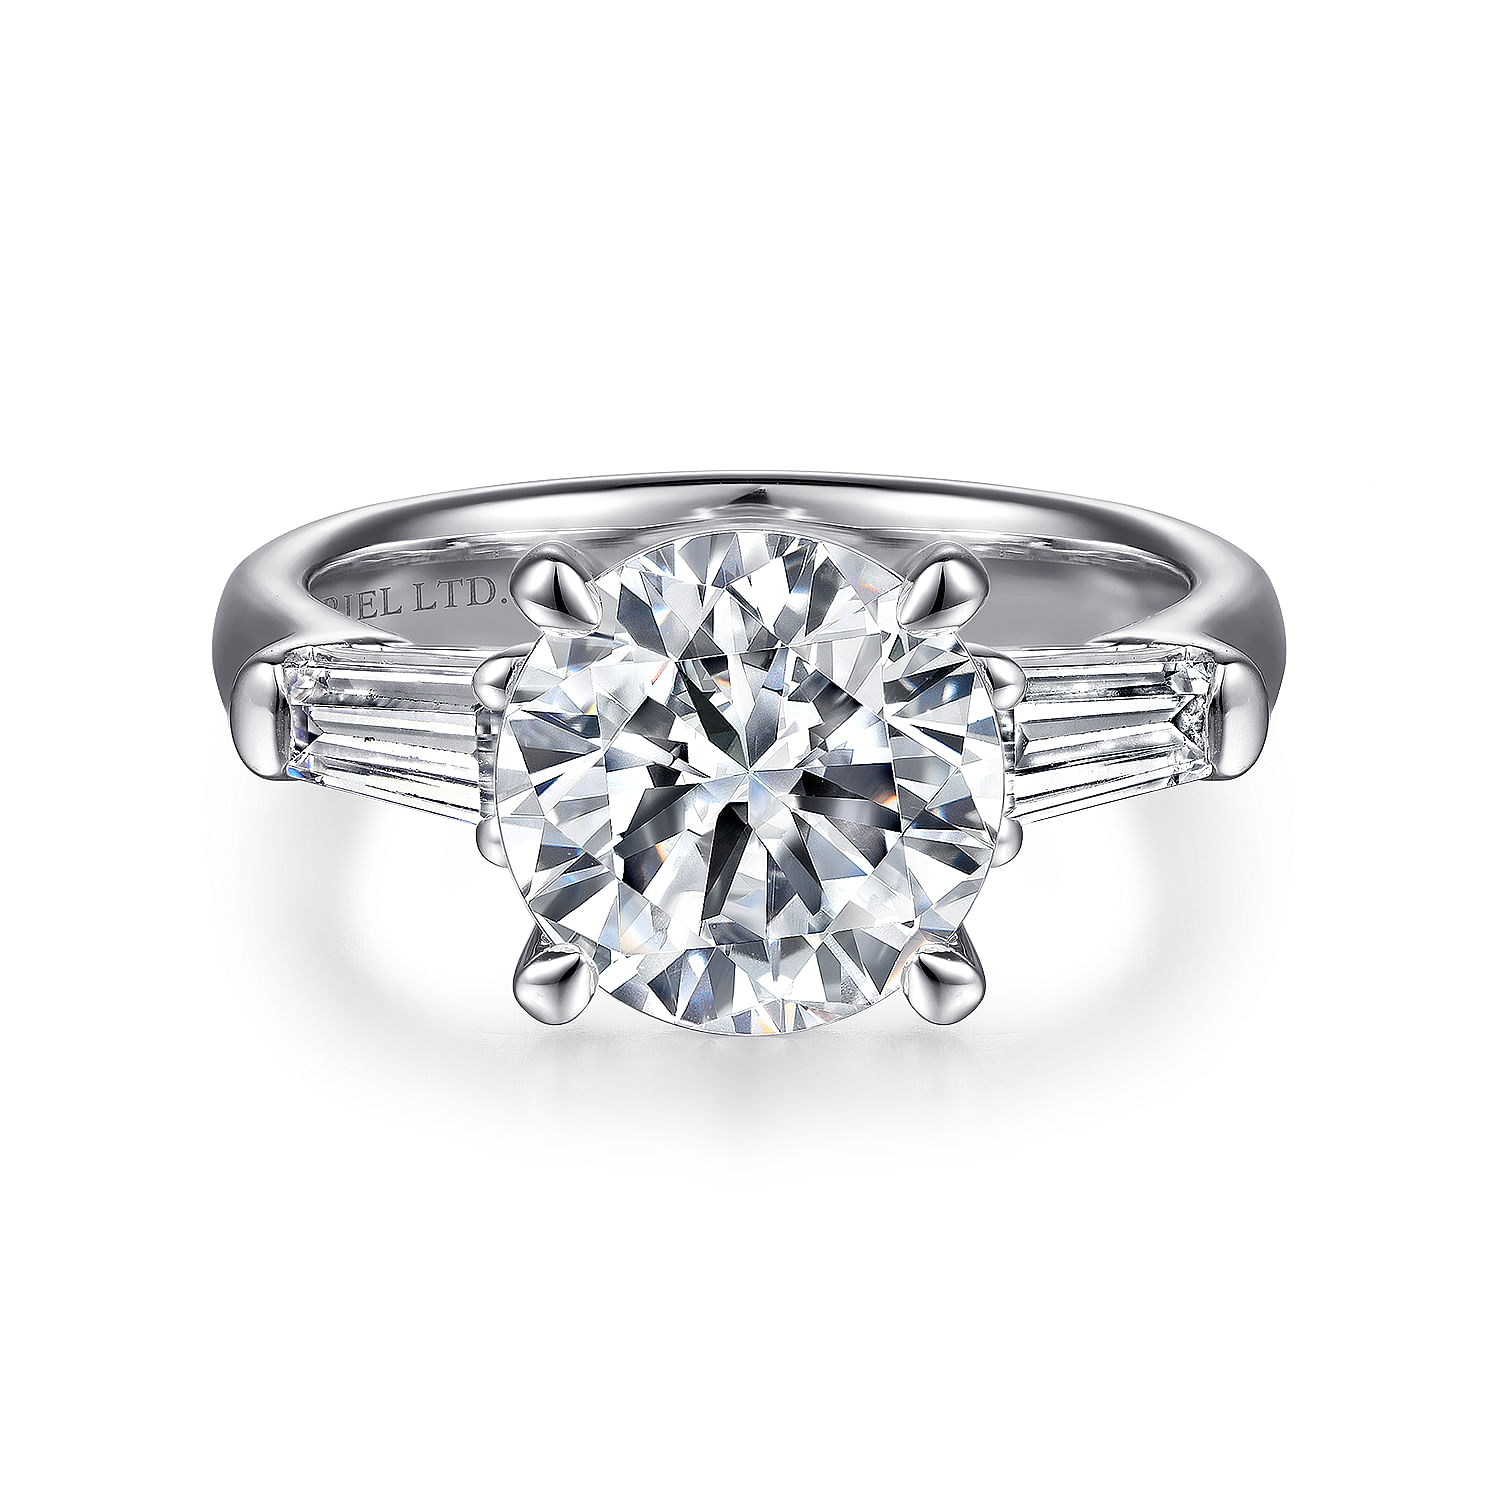 Gabriel - 18K White Gold Round Three Stone Diamond Engagement Ring